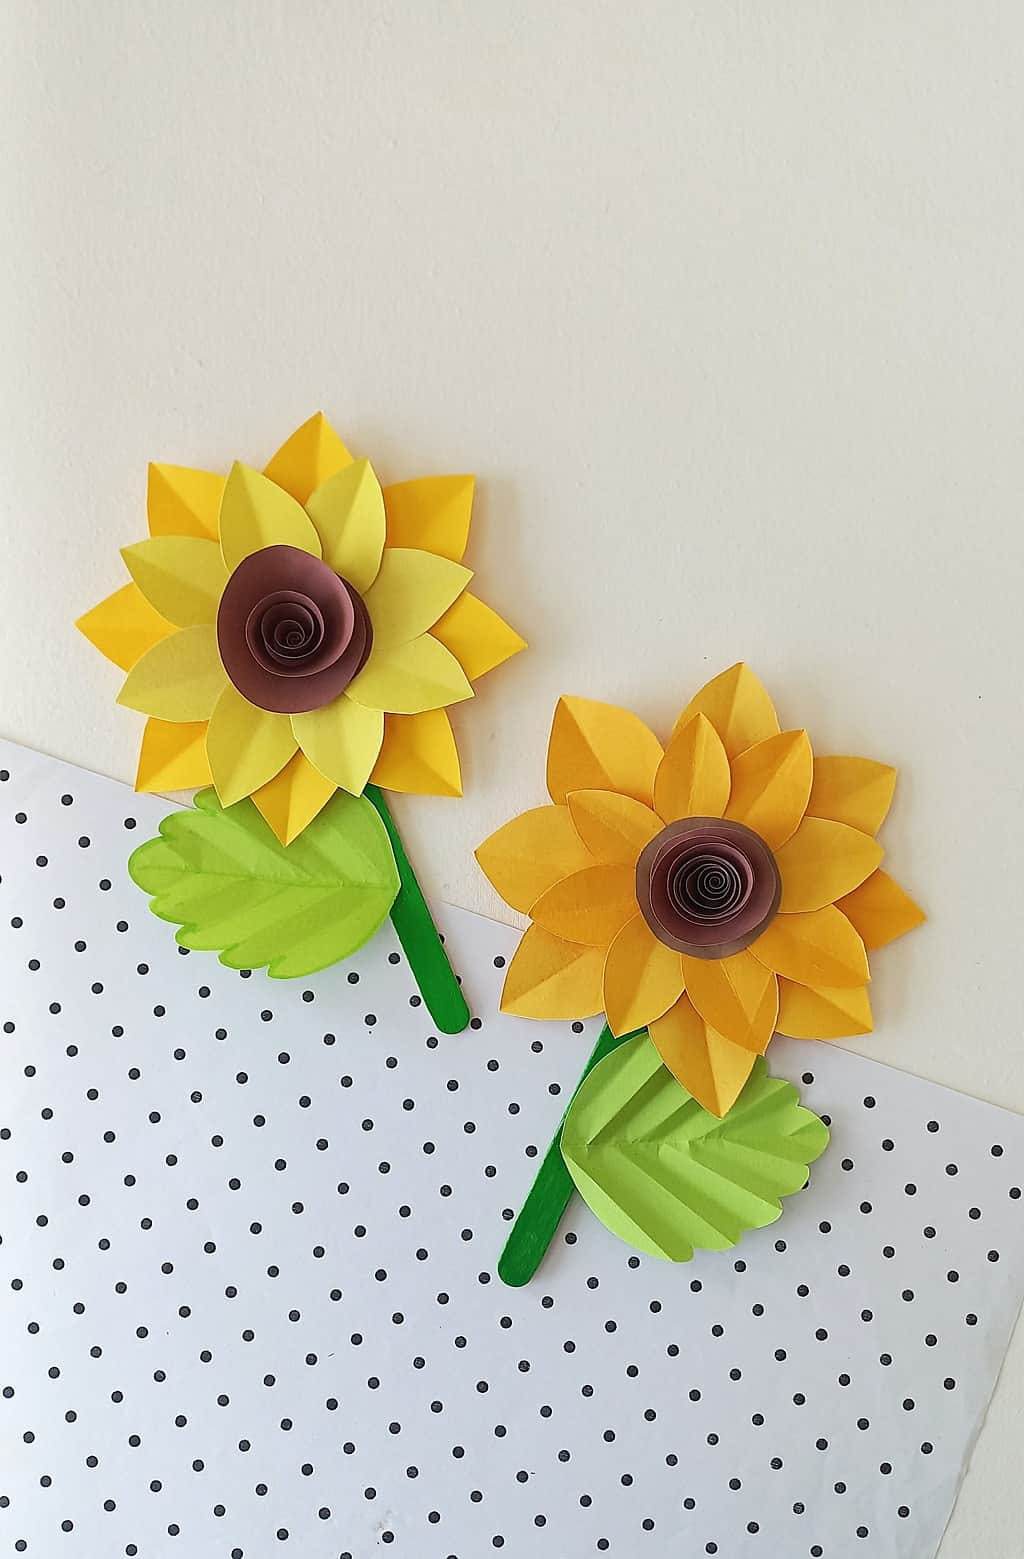 Sunflower Craft for Kids